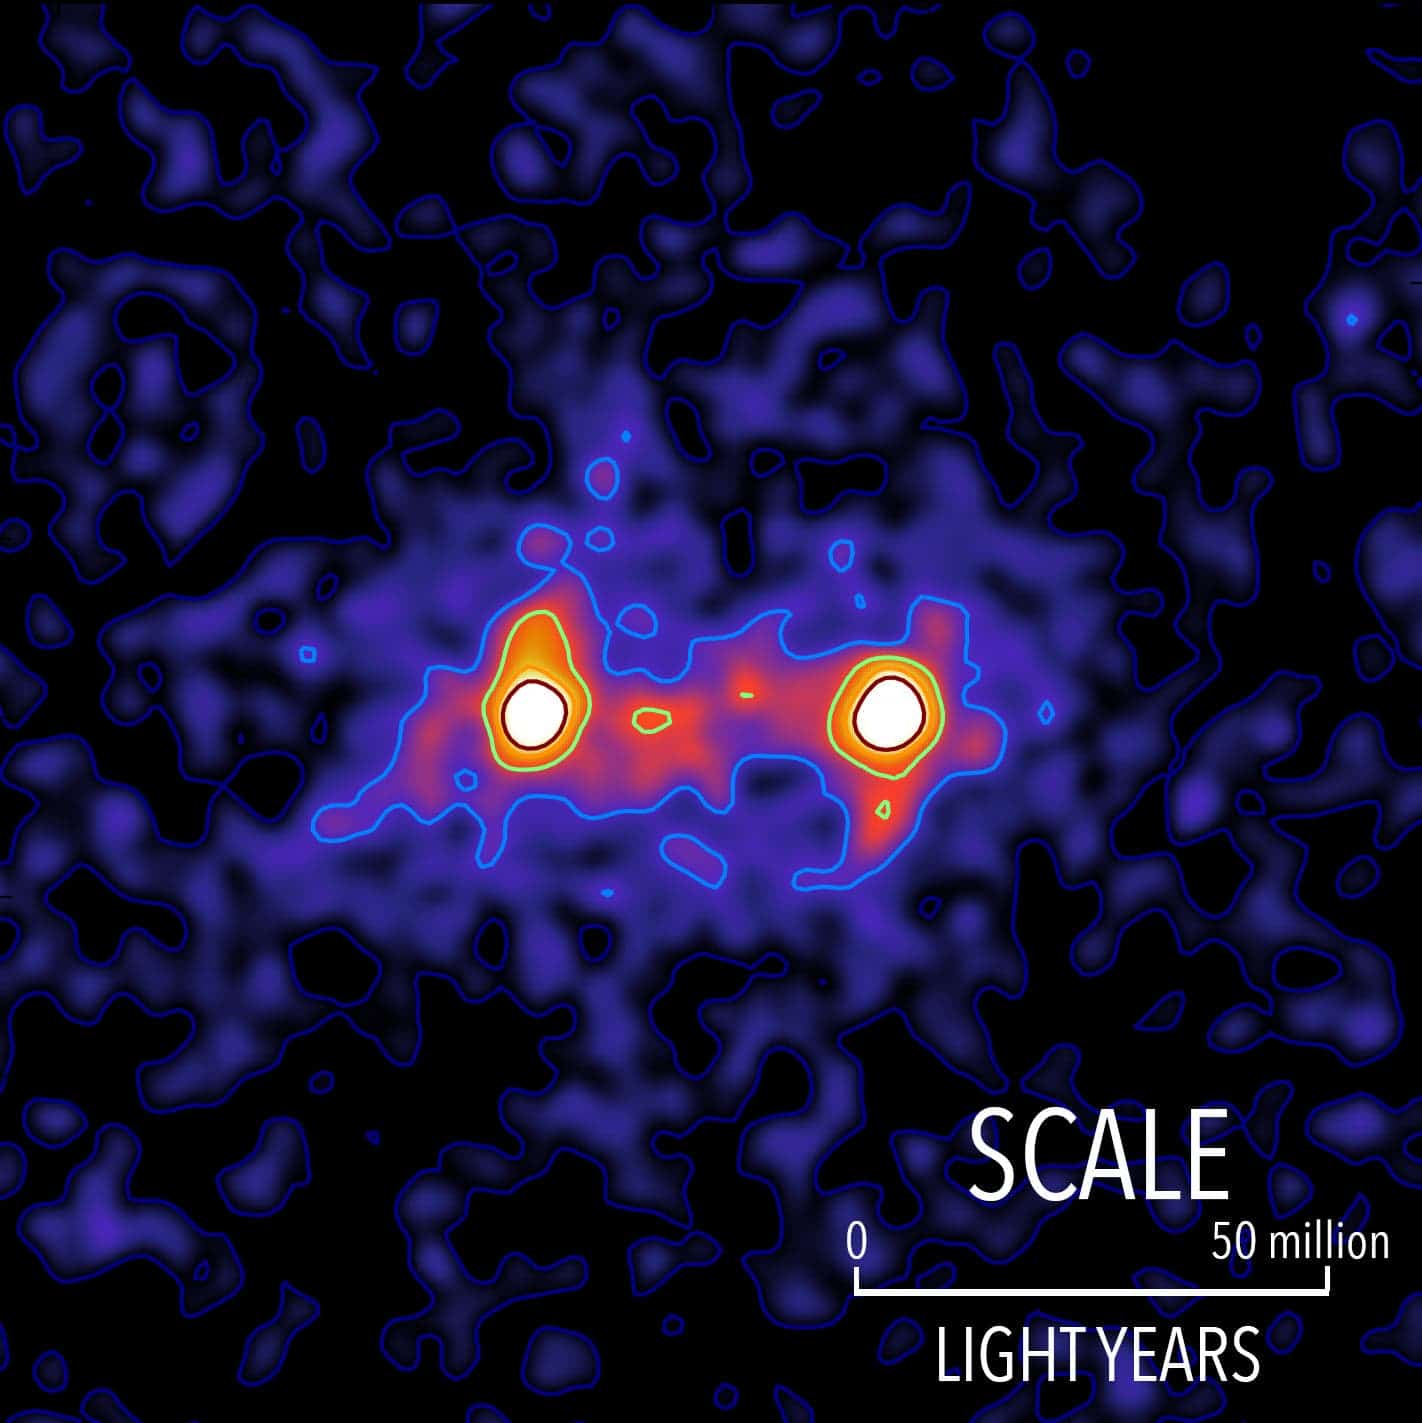 Dark matter filaments bridge the space between galaxies in this false colour map. Credit: S. Epps & M. Hudson / University of Waterloo